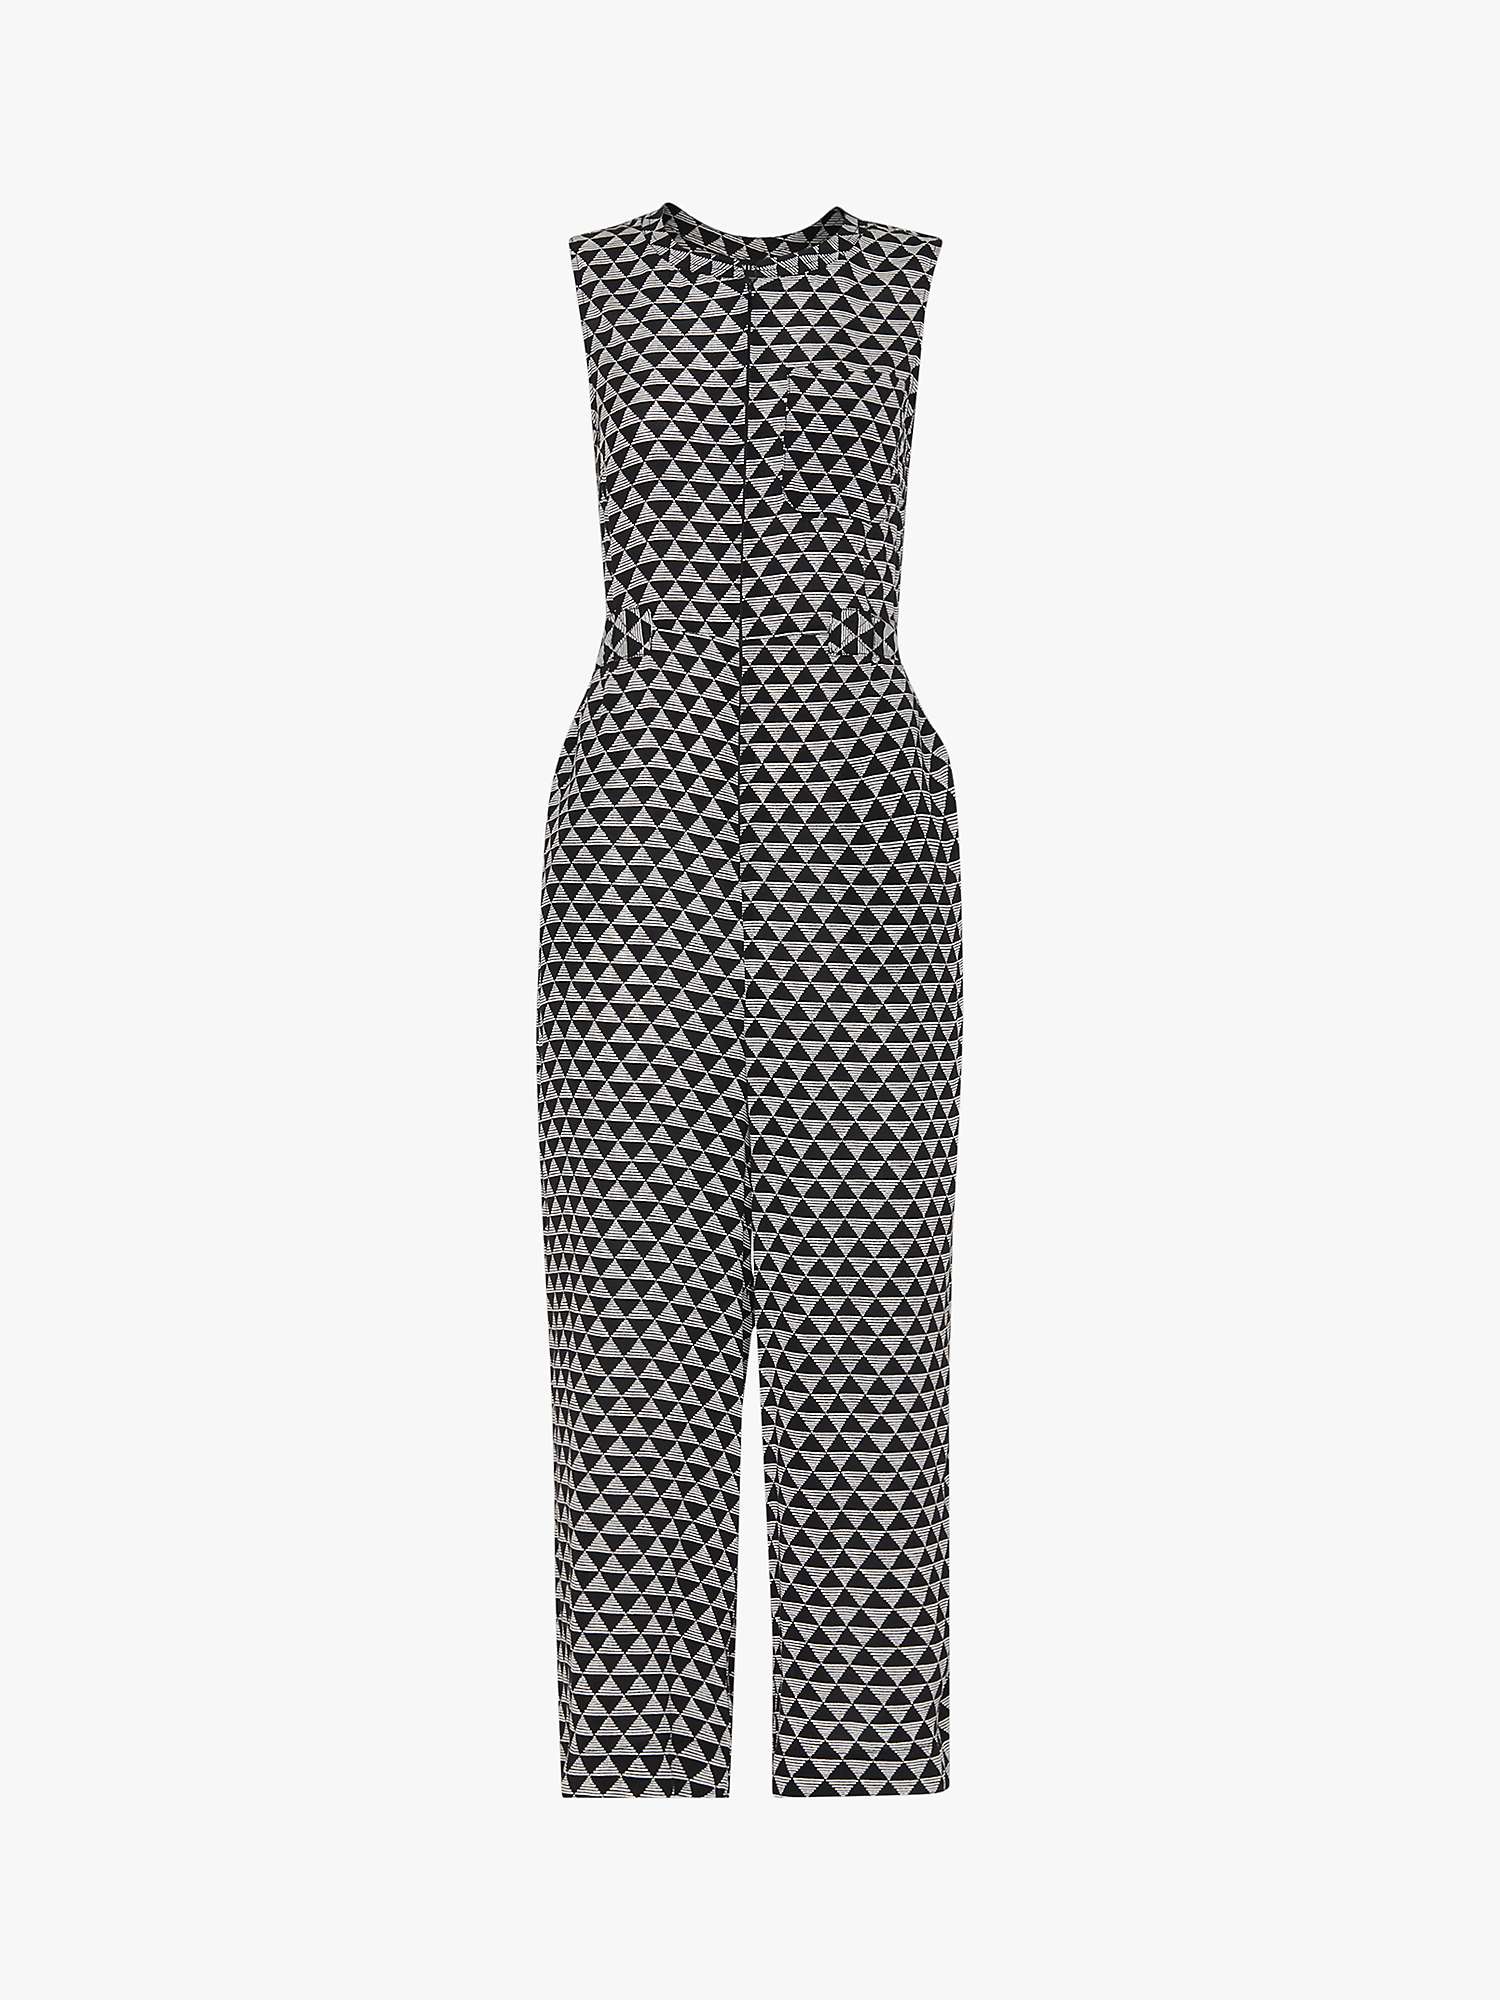 Whistles Petite Checkerboard Jumpsuit, Black/Multi at John Lewis & Partners